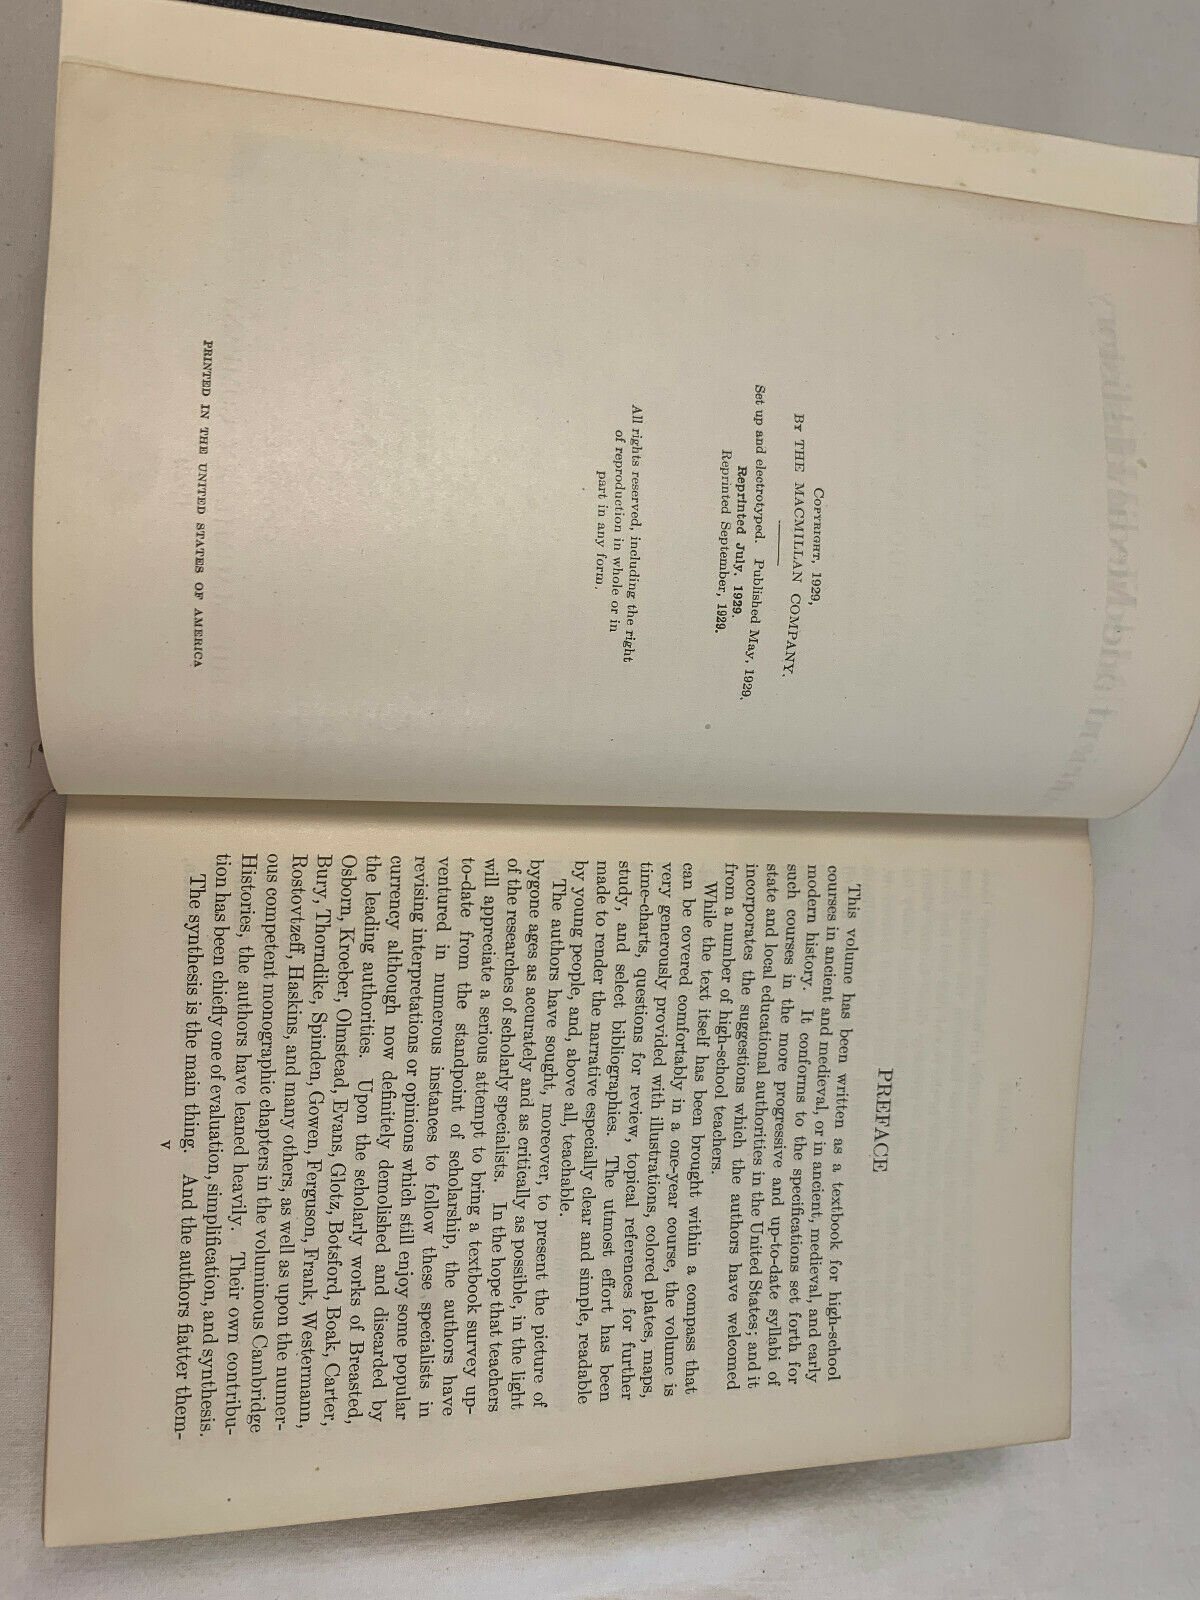 Ancient and Medieval History by Carlton J H Hayes & P T Moon MacMillan 1929